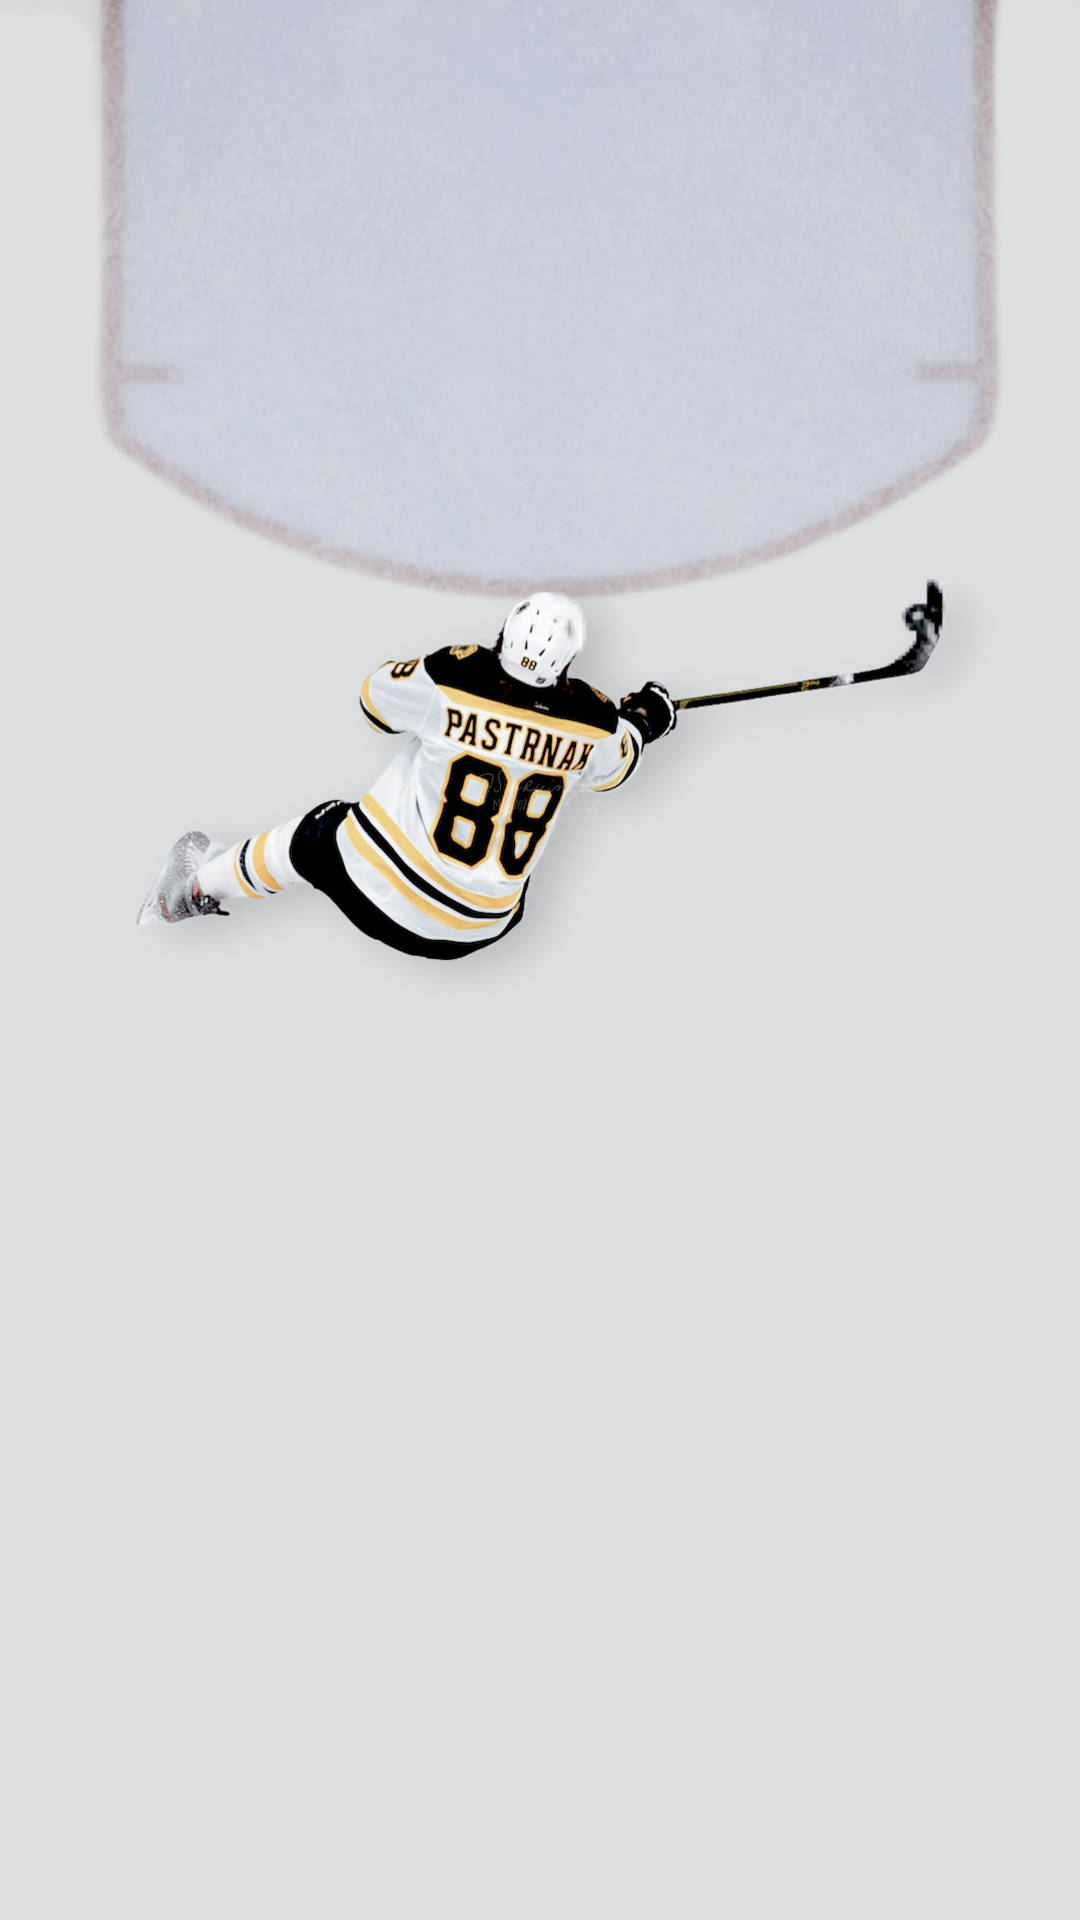 David Pastrnak Ice Hockey Drone Shot Wallpaper